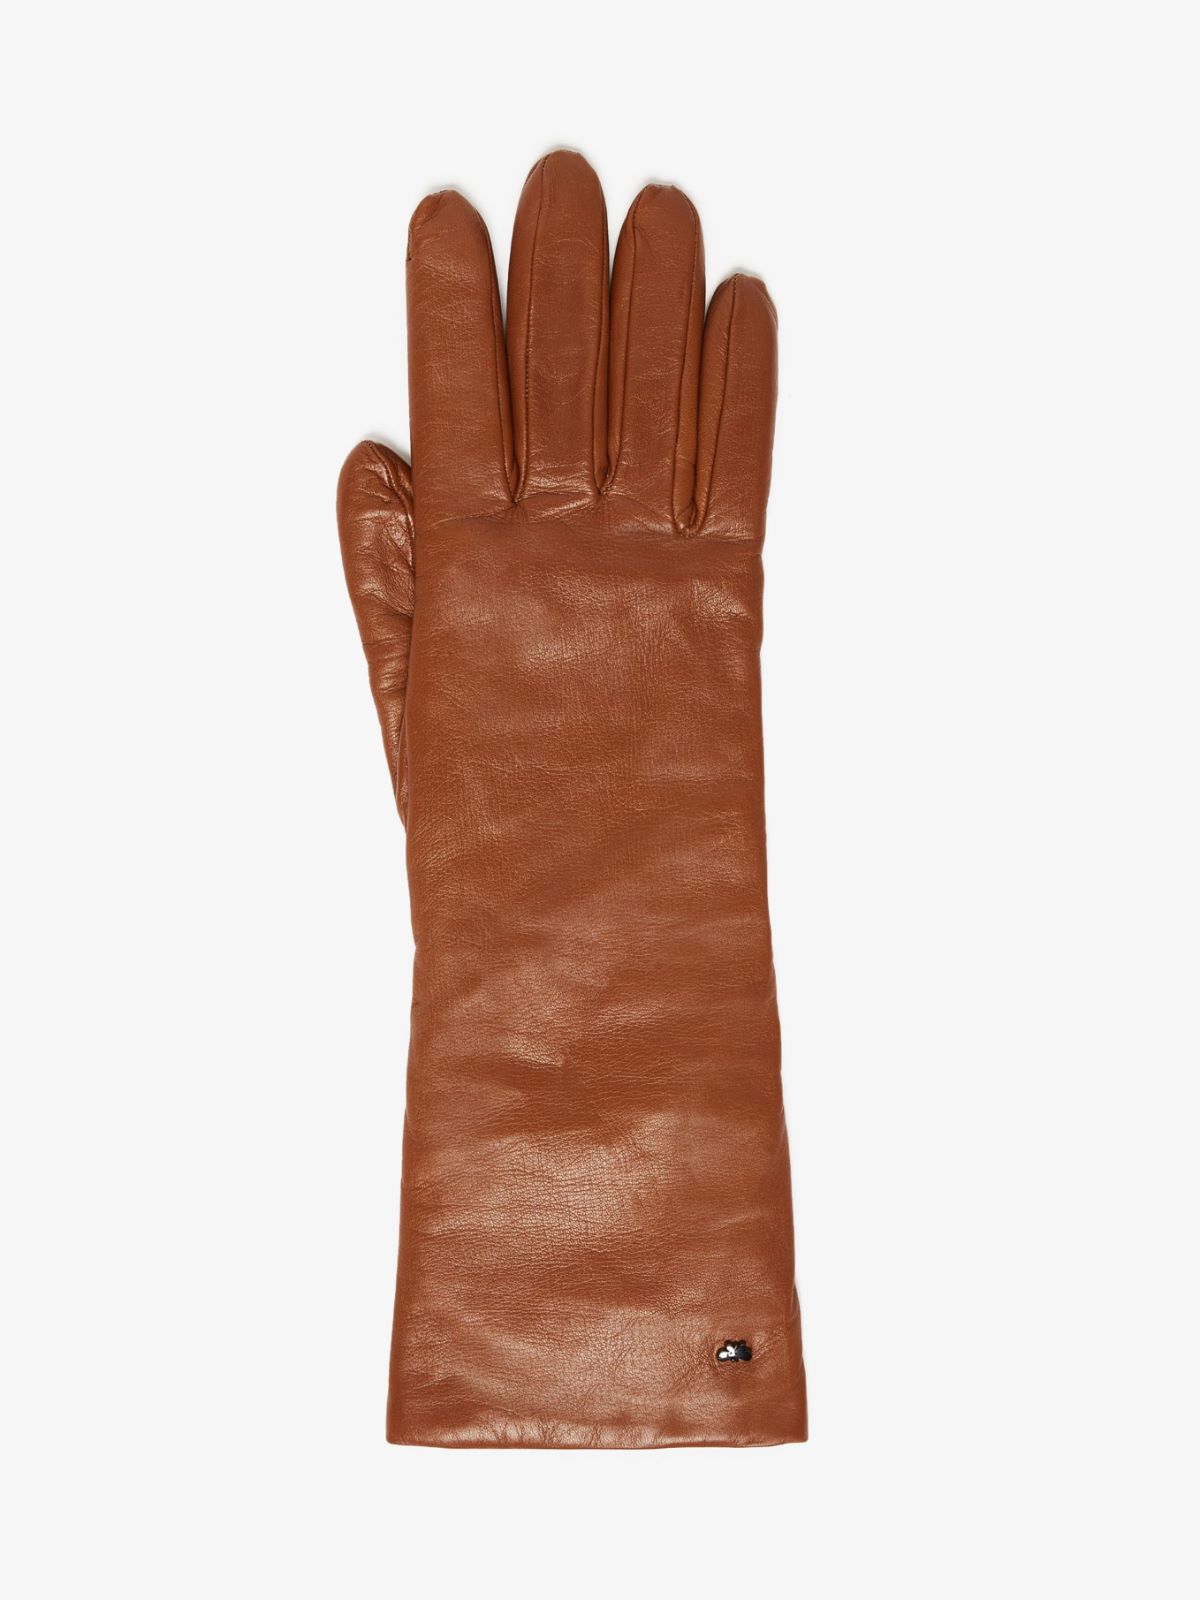 Nappa leather gloves - TOBACCO - Weekend Max Mara - 2